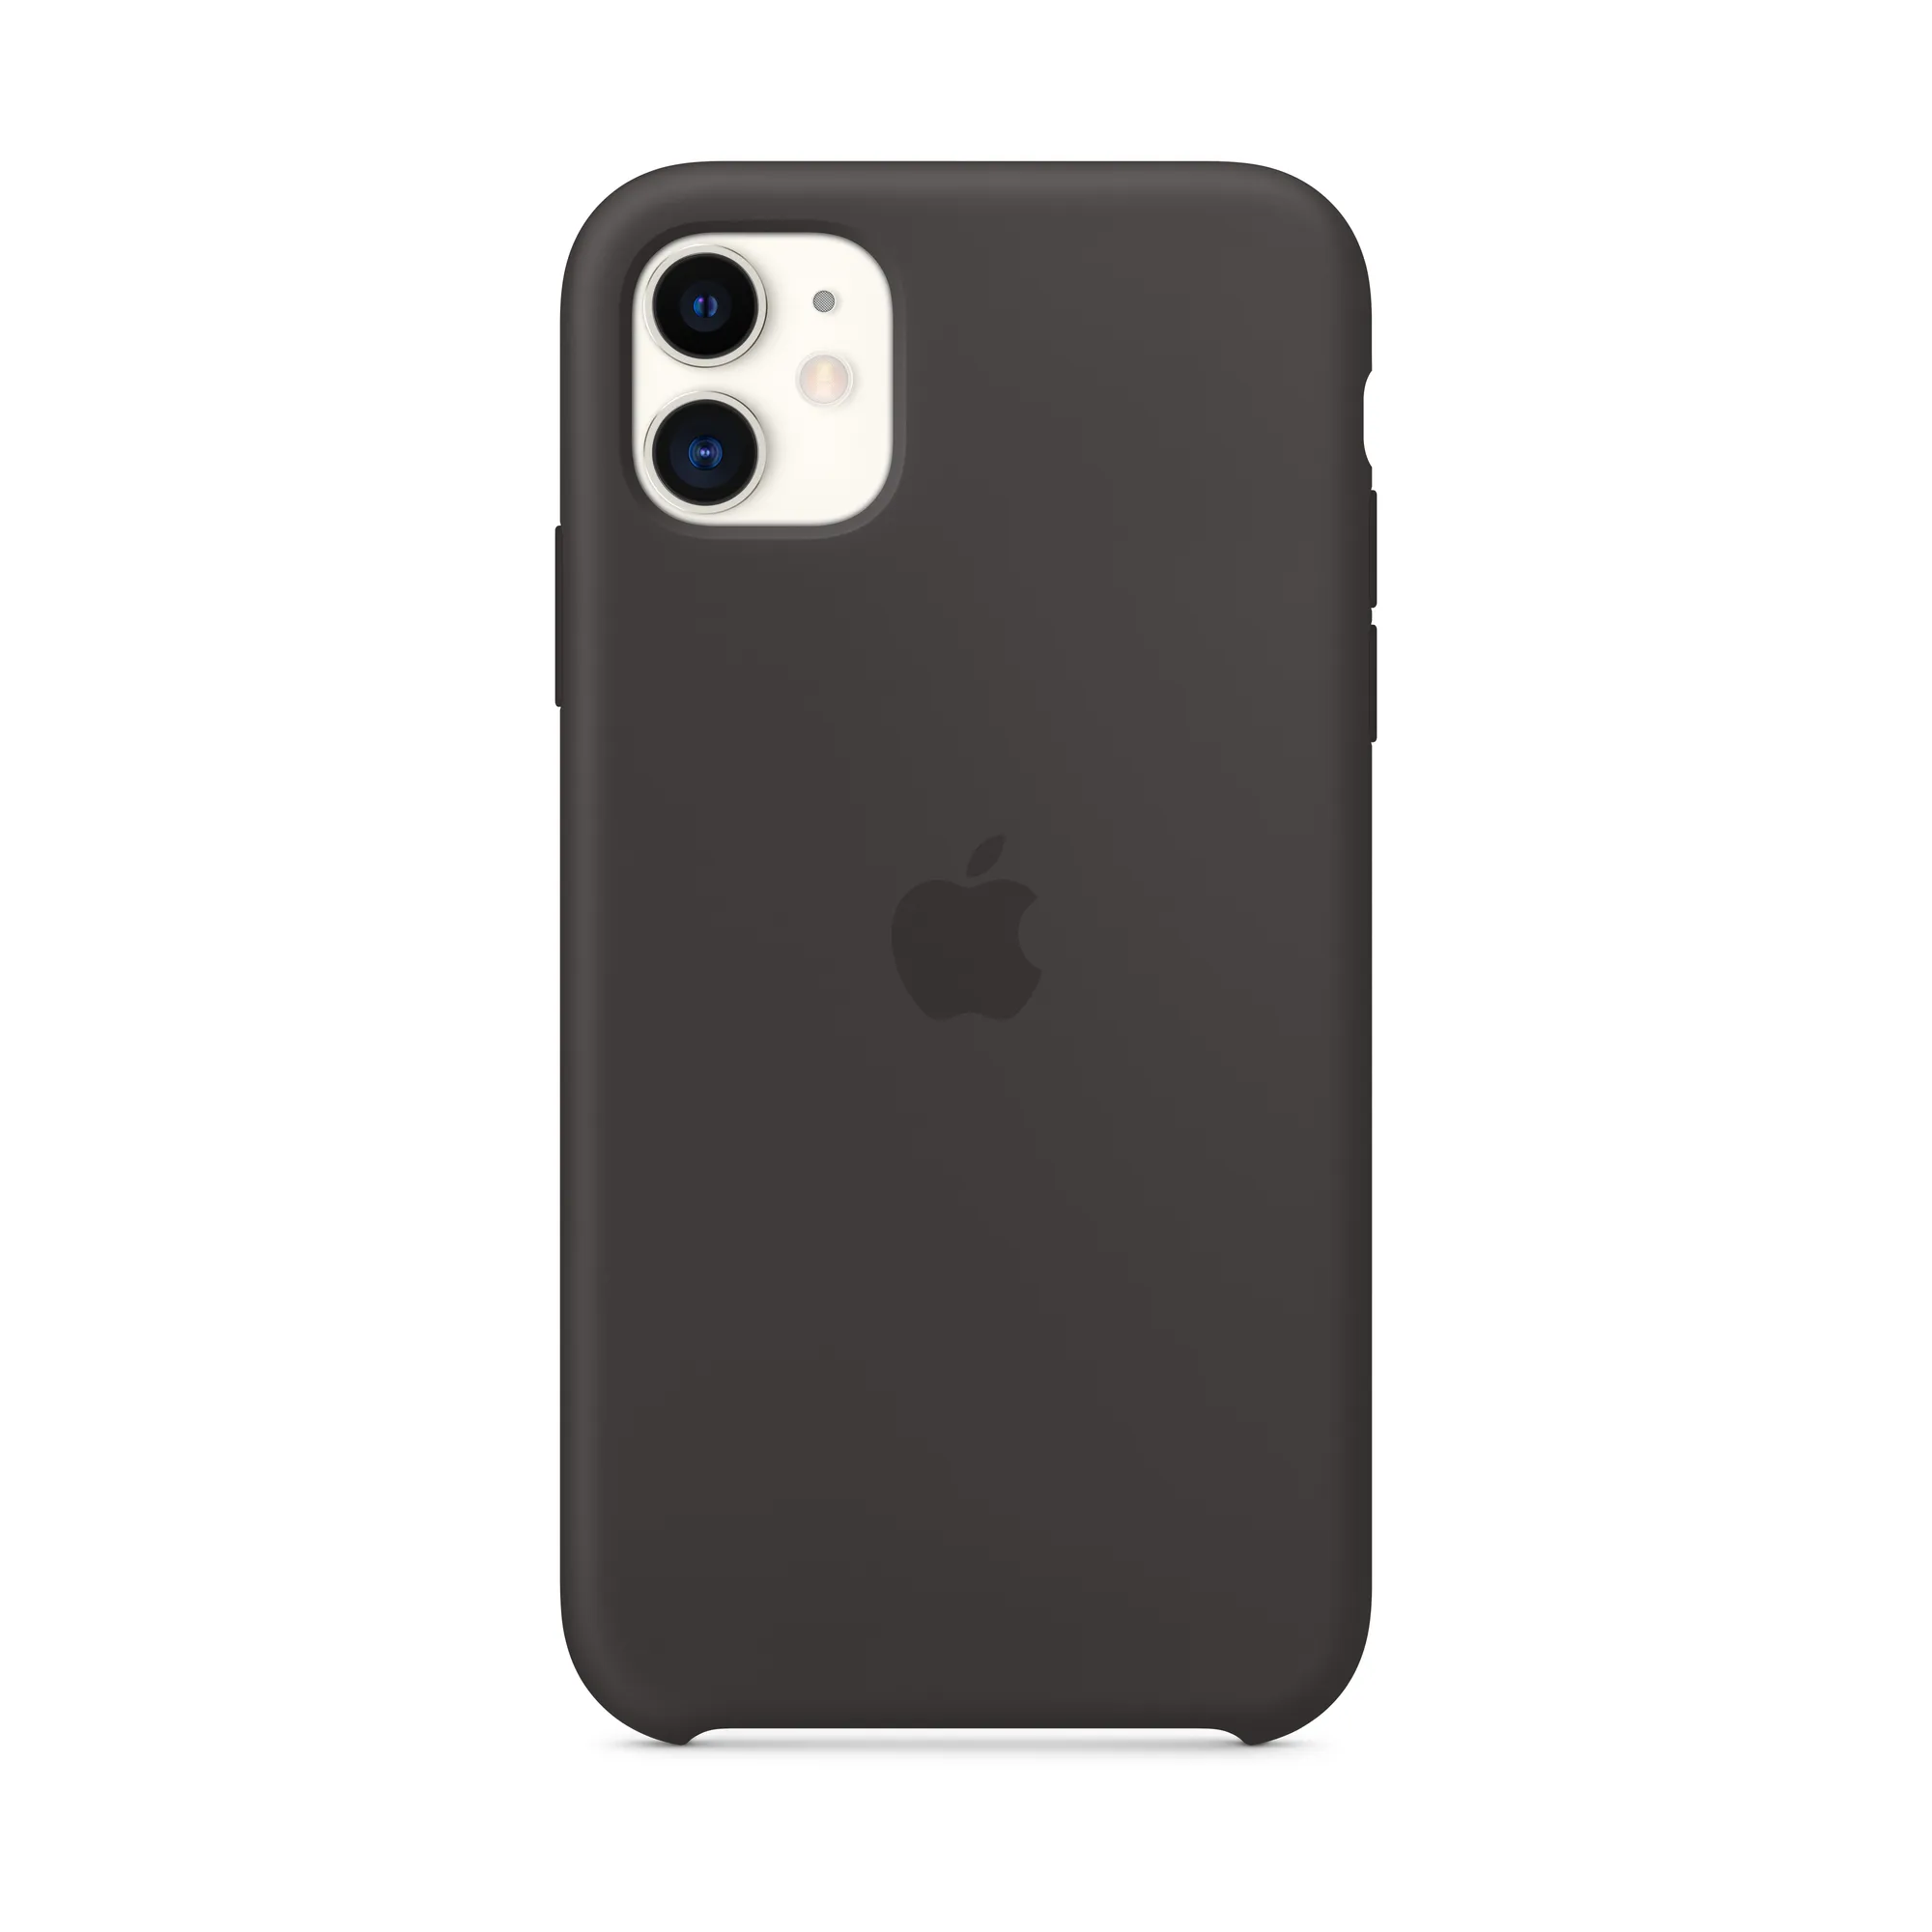 Apple iPhone 11 Silicone Case